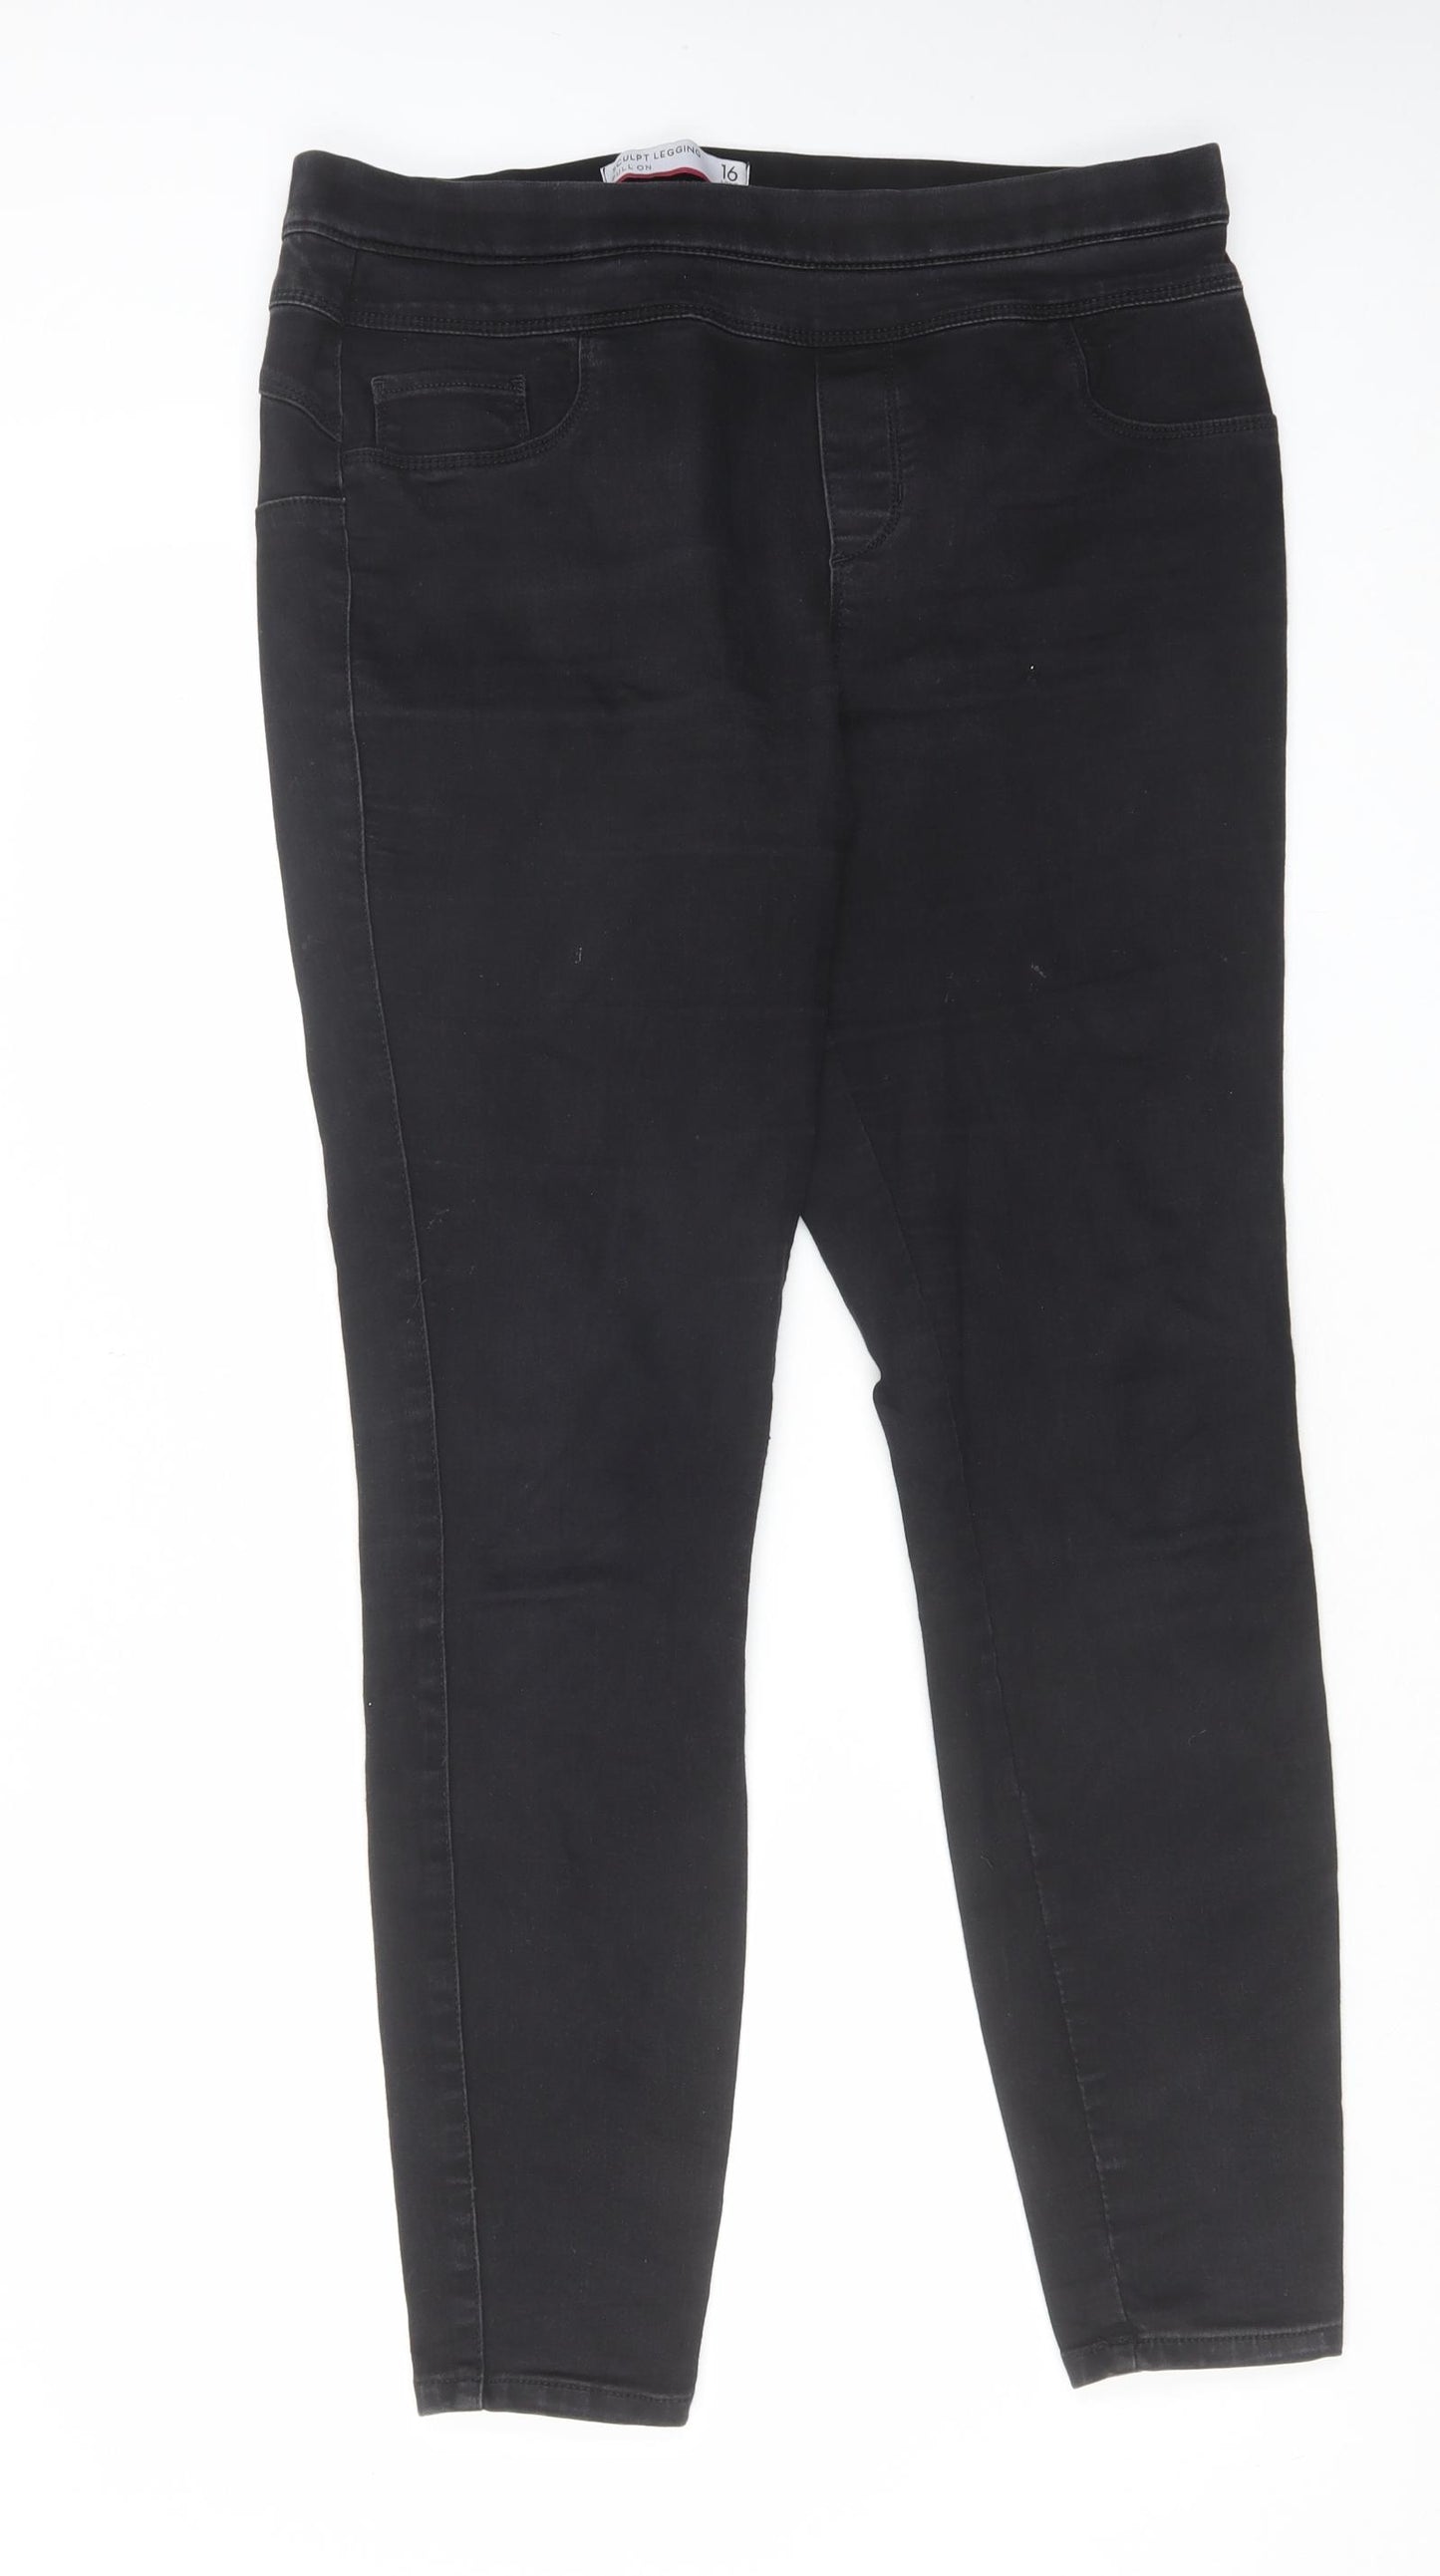 NEXT Womens Black Cotton Jegging Jeans Size 16 L31 in Regular Zip